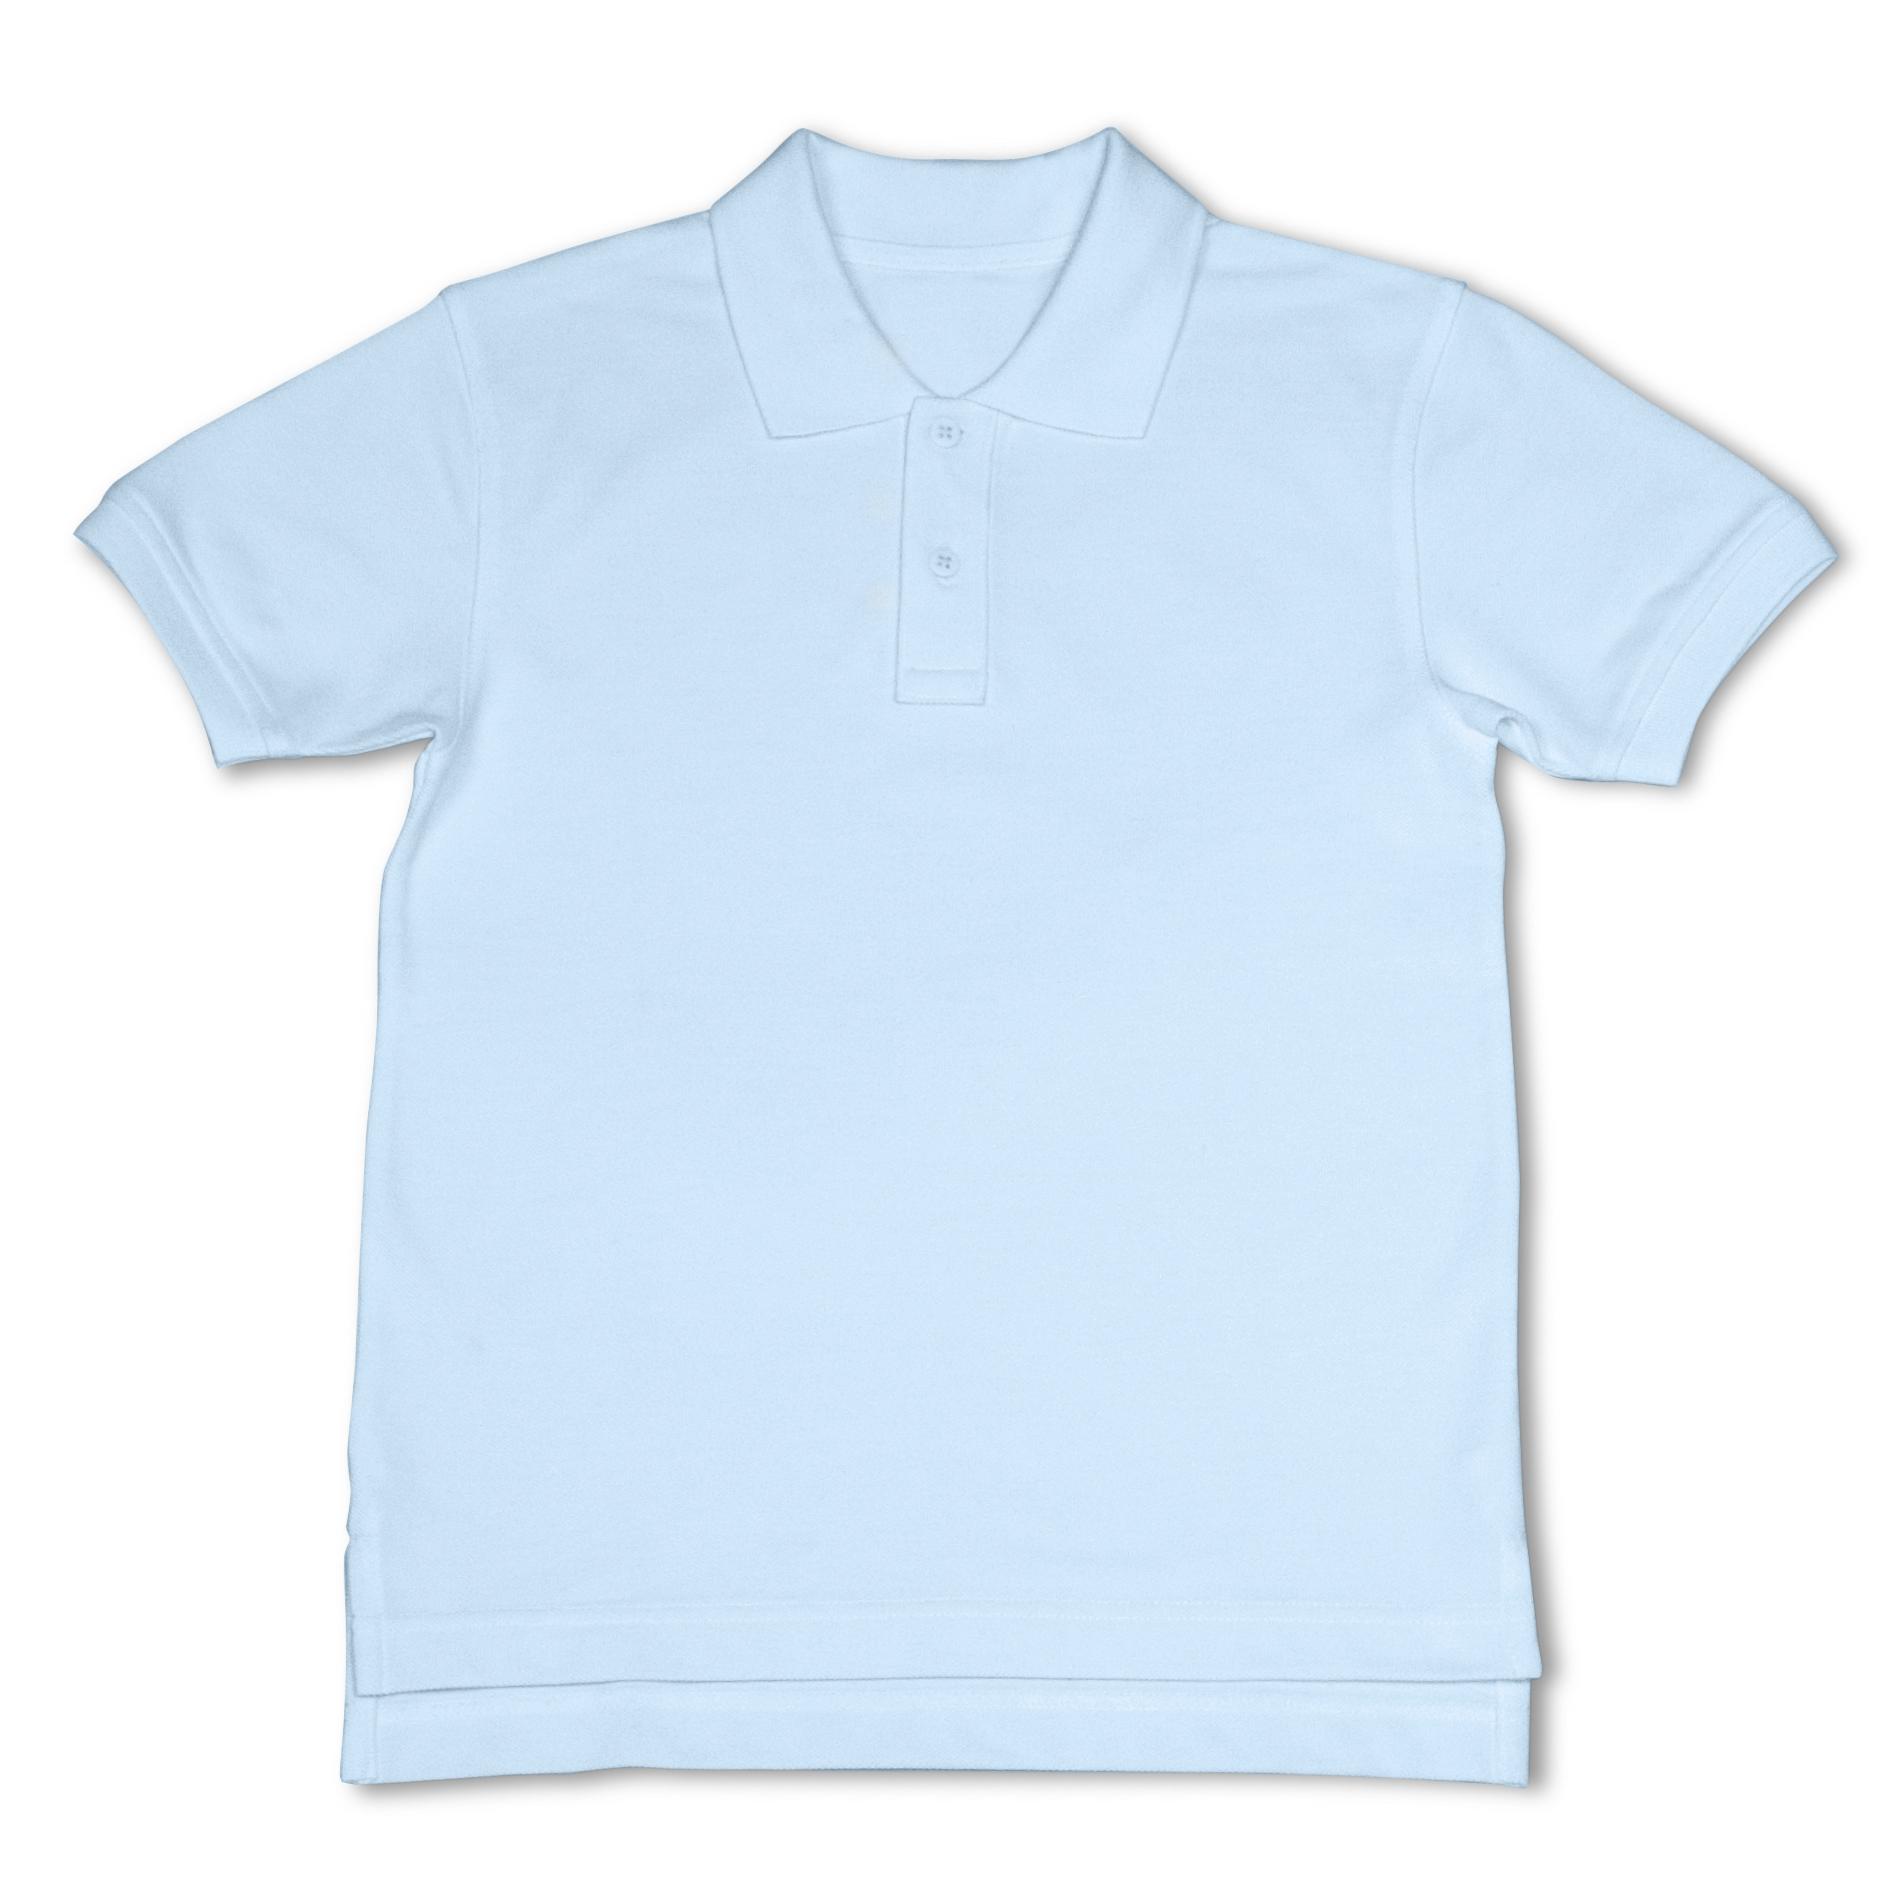 Dockers Boy's Husky Uniform Polo Shirt - Light Blue